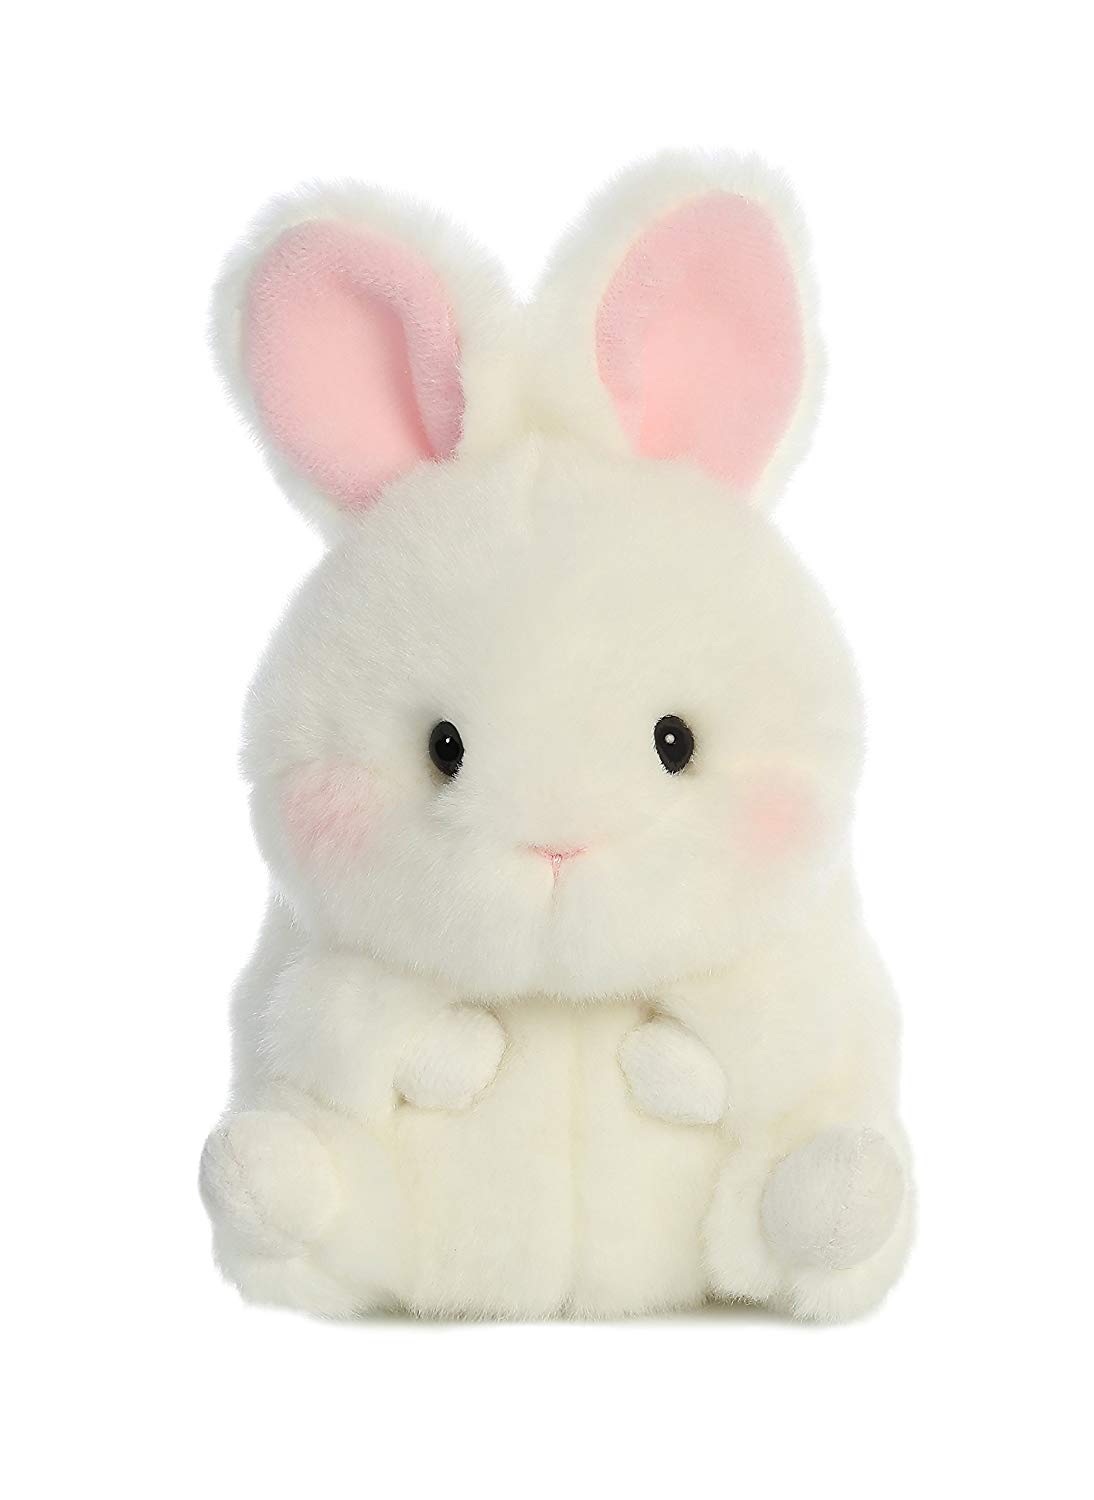 Adorable stuffed bunny toy